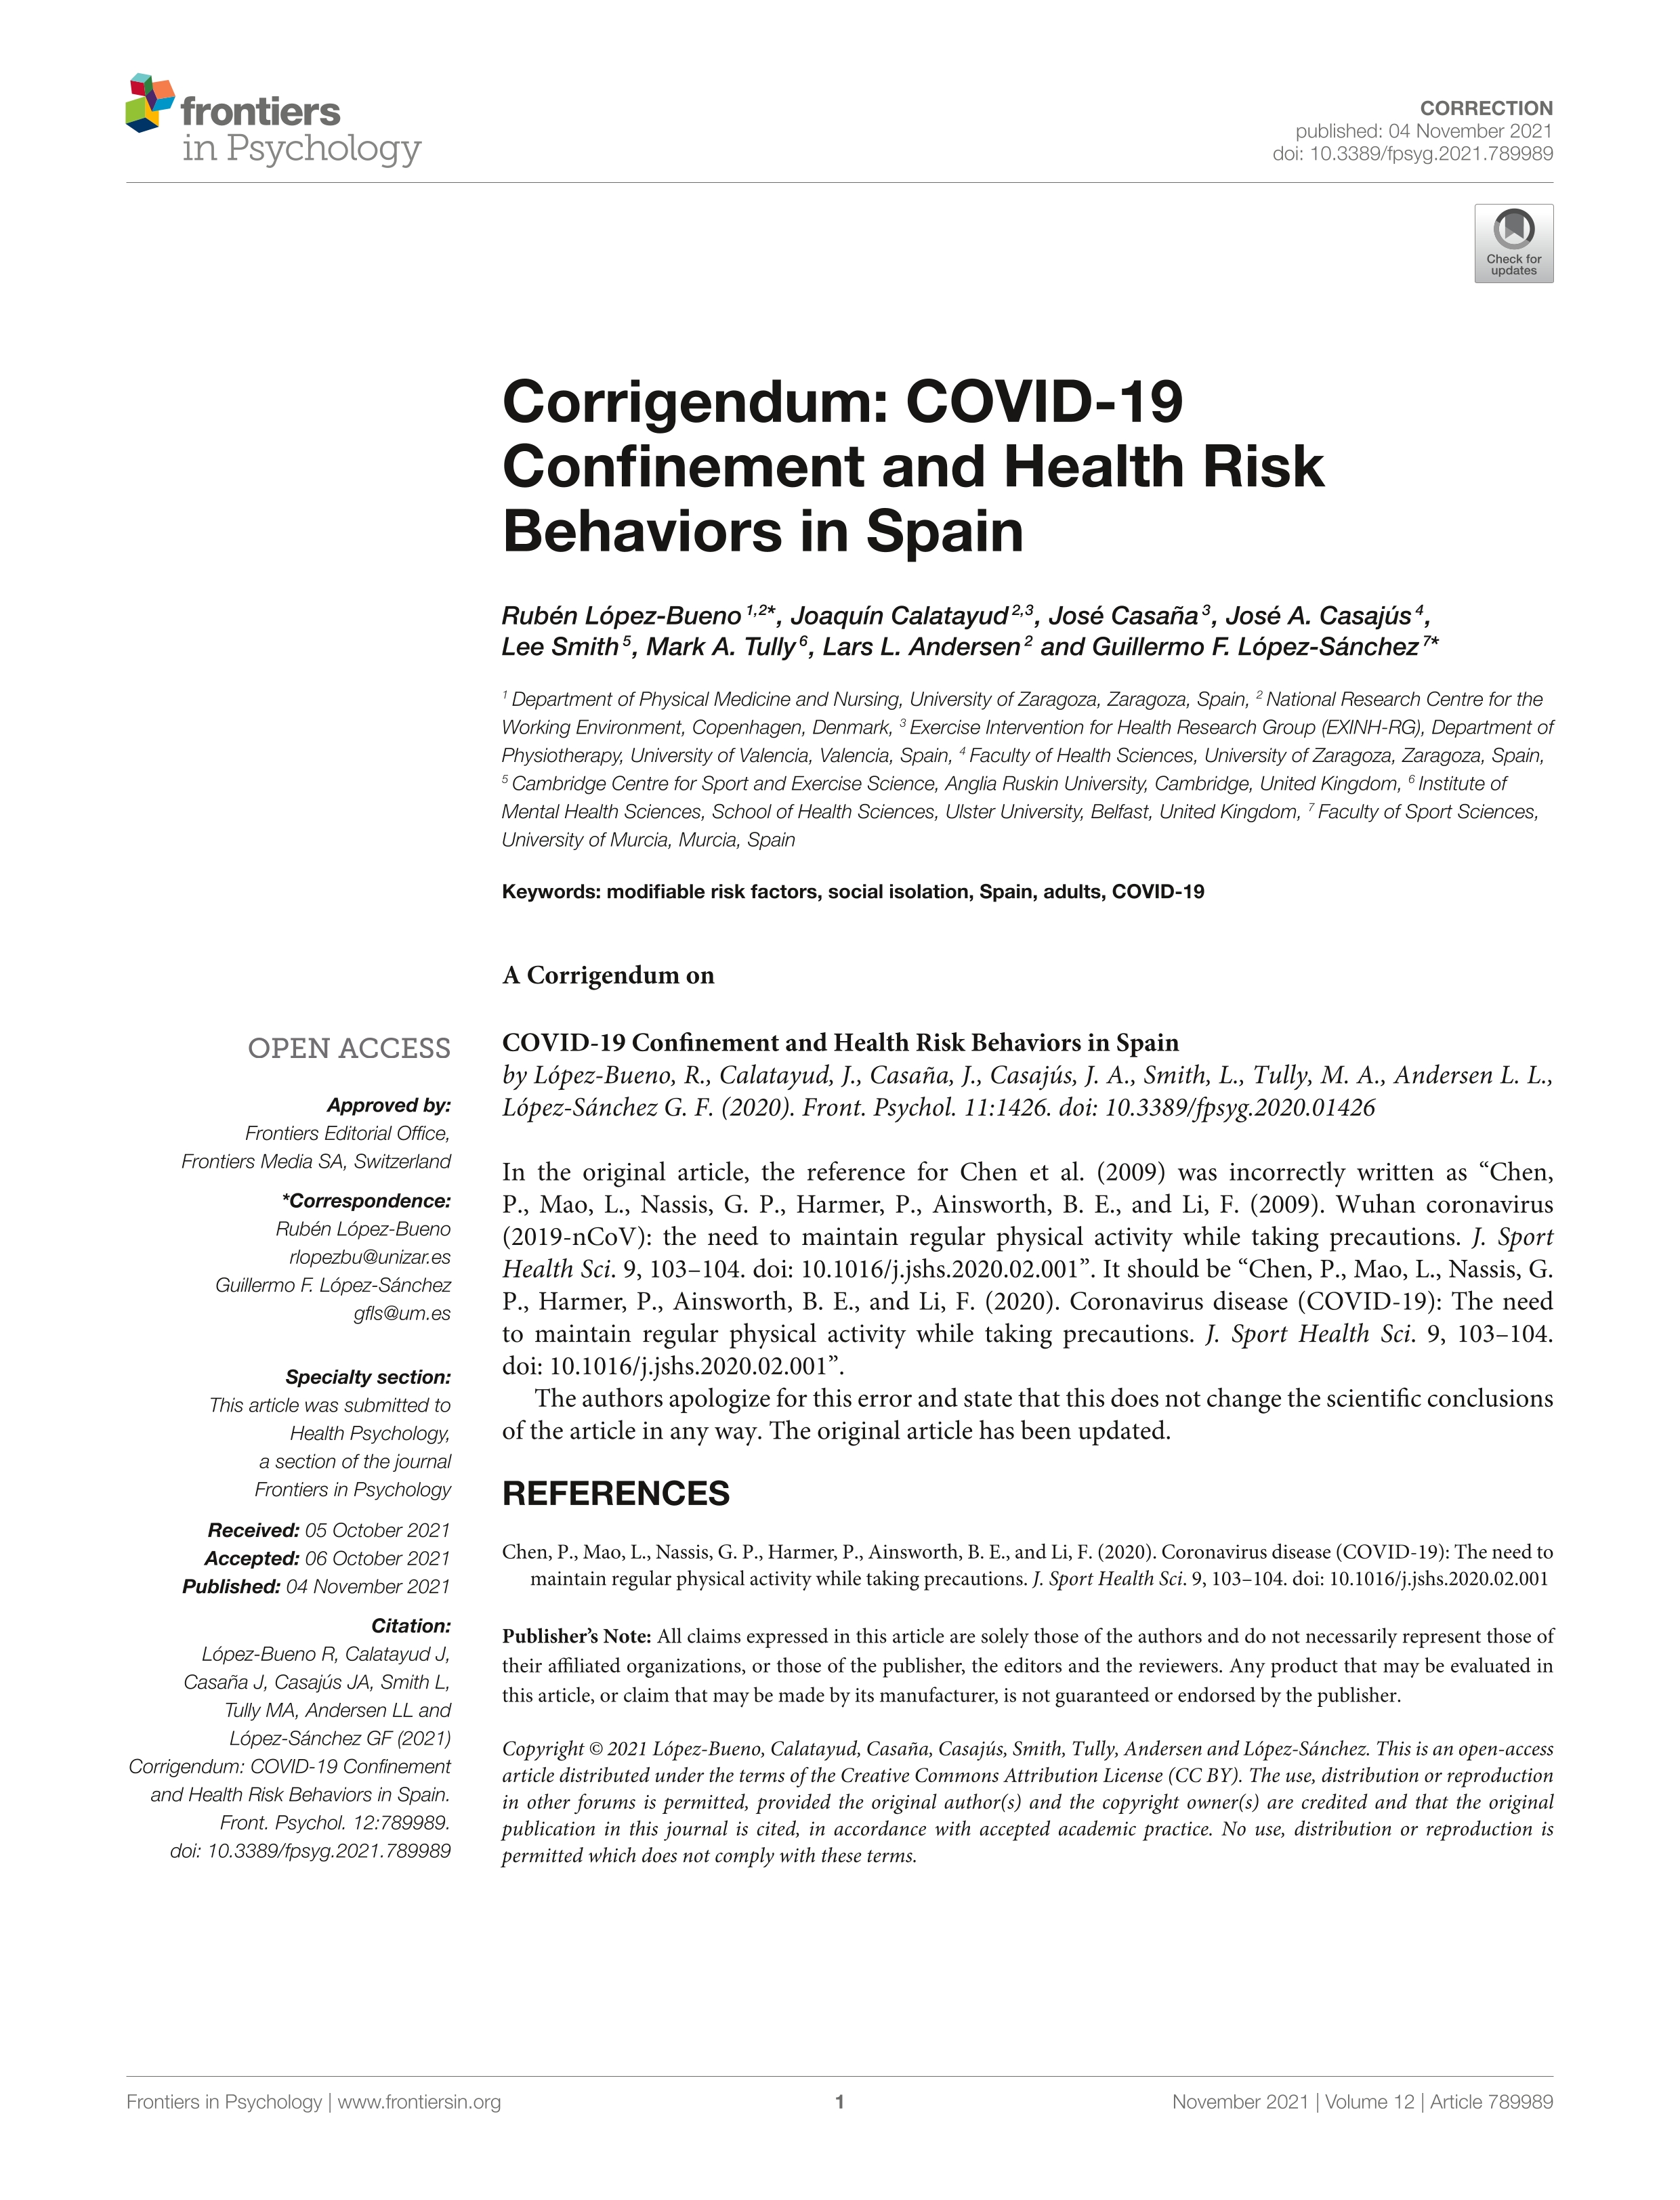 Corrigendum: COVID-19 confinement and health risk behaviors in Spain